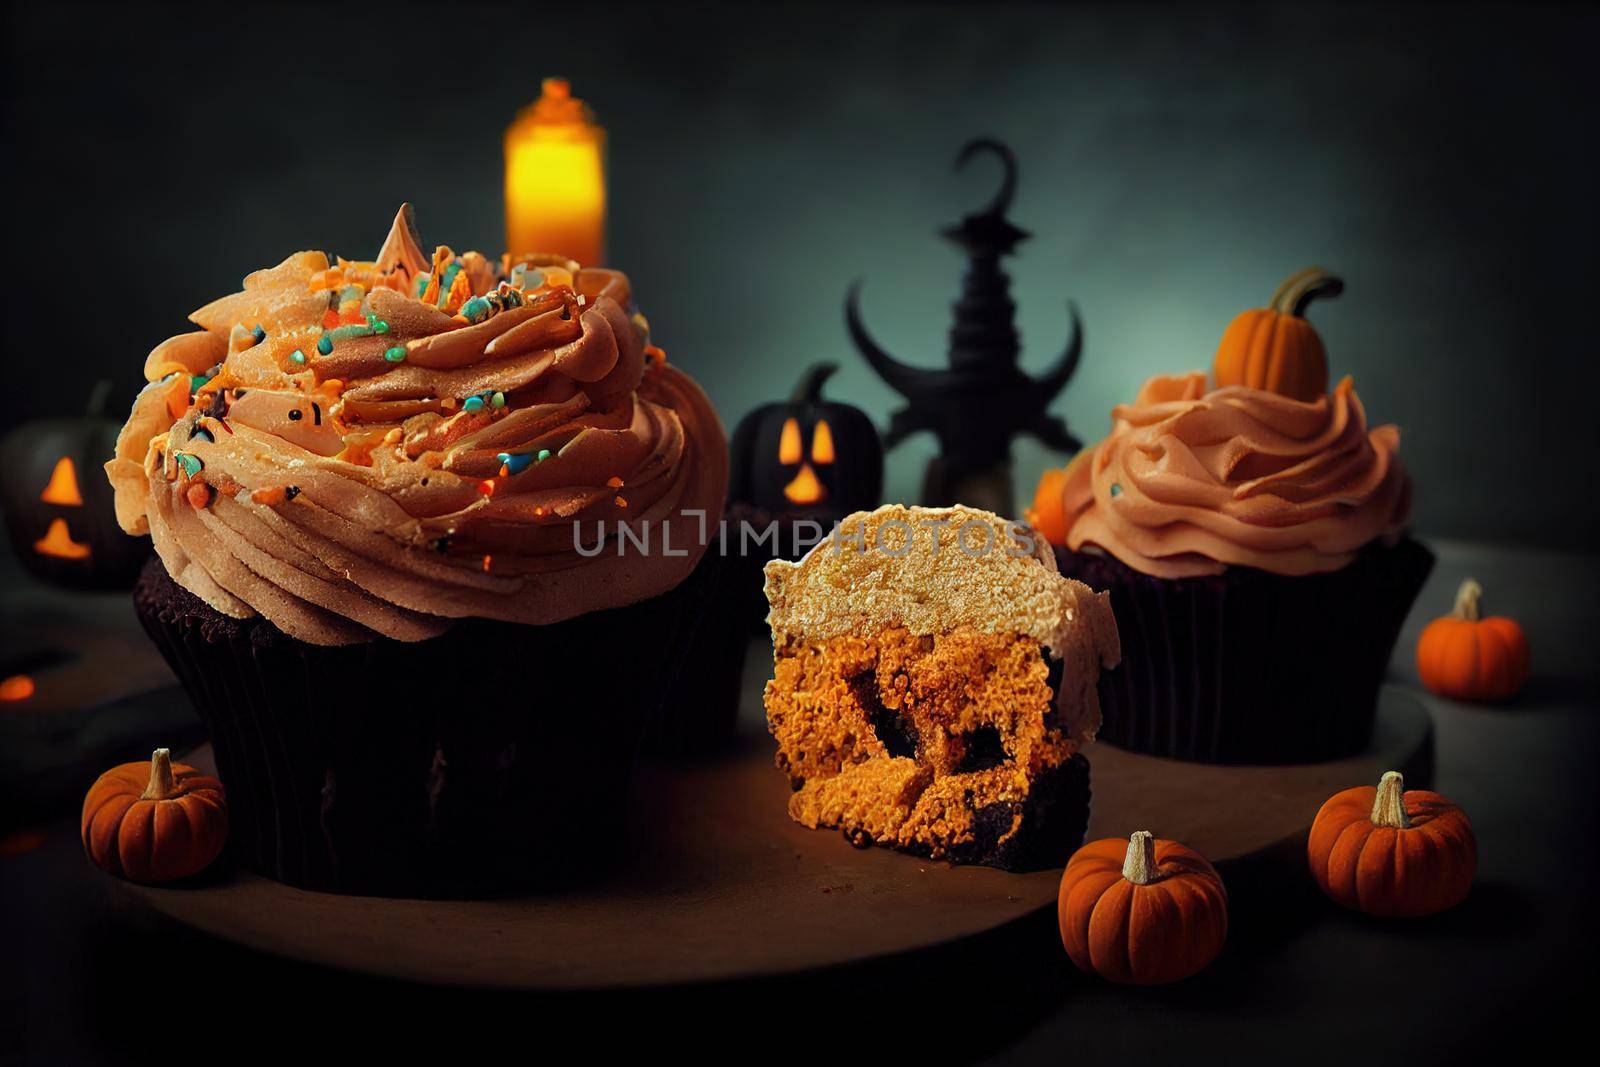 cupcake and pumpkin on a dark background by 2ragon